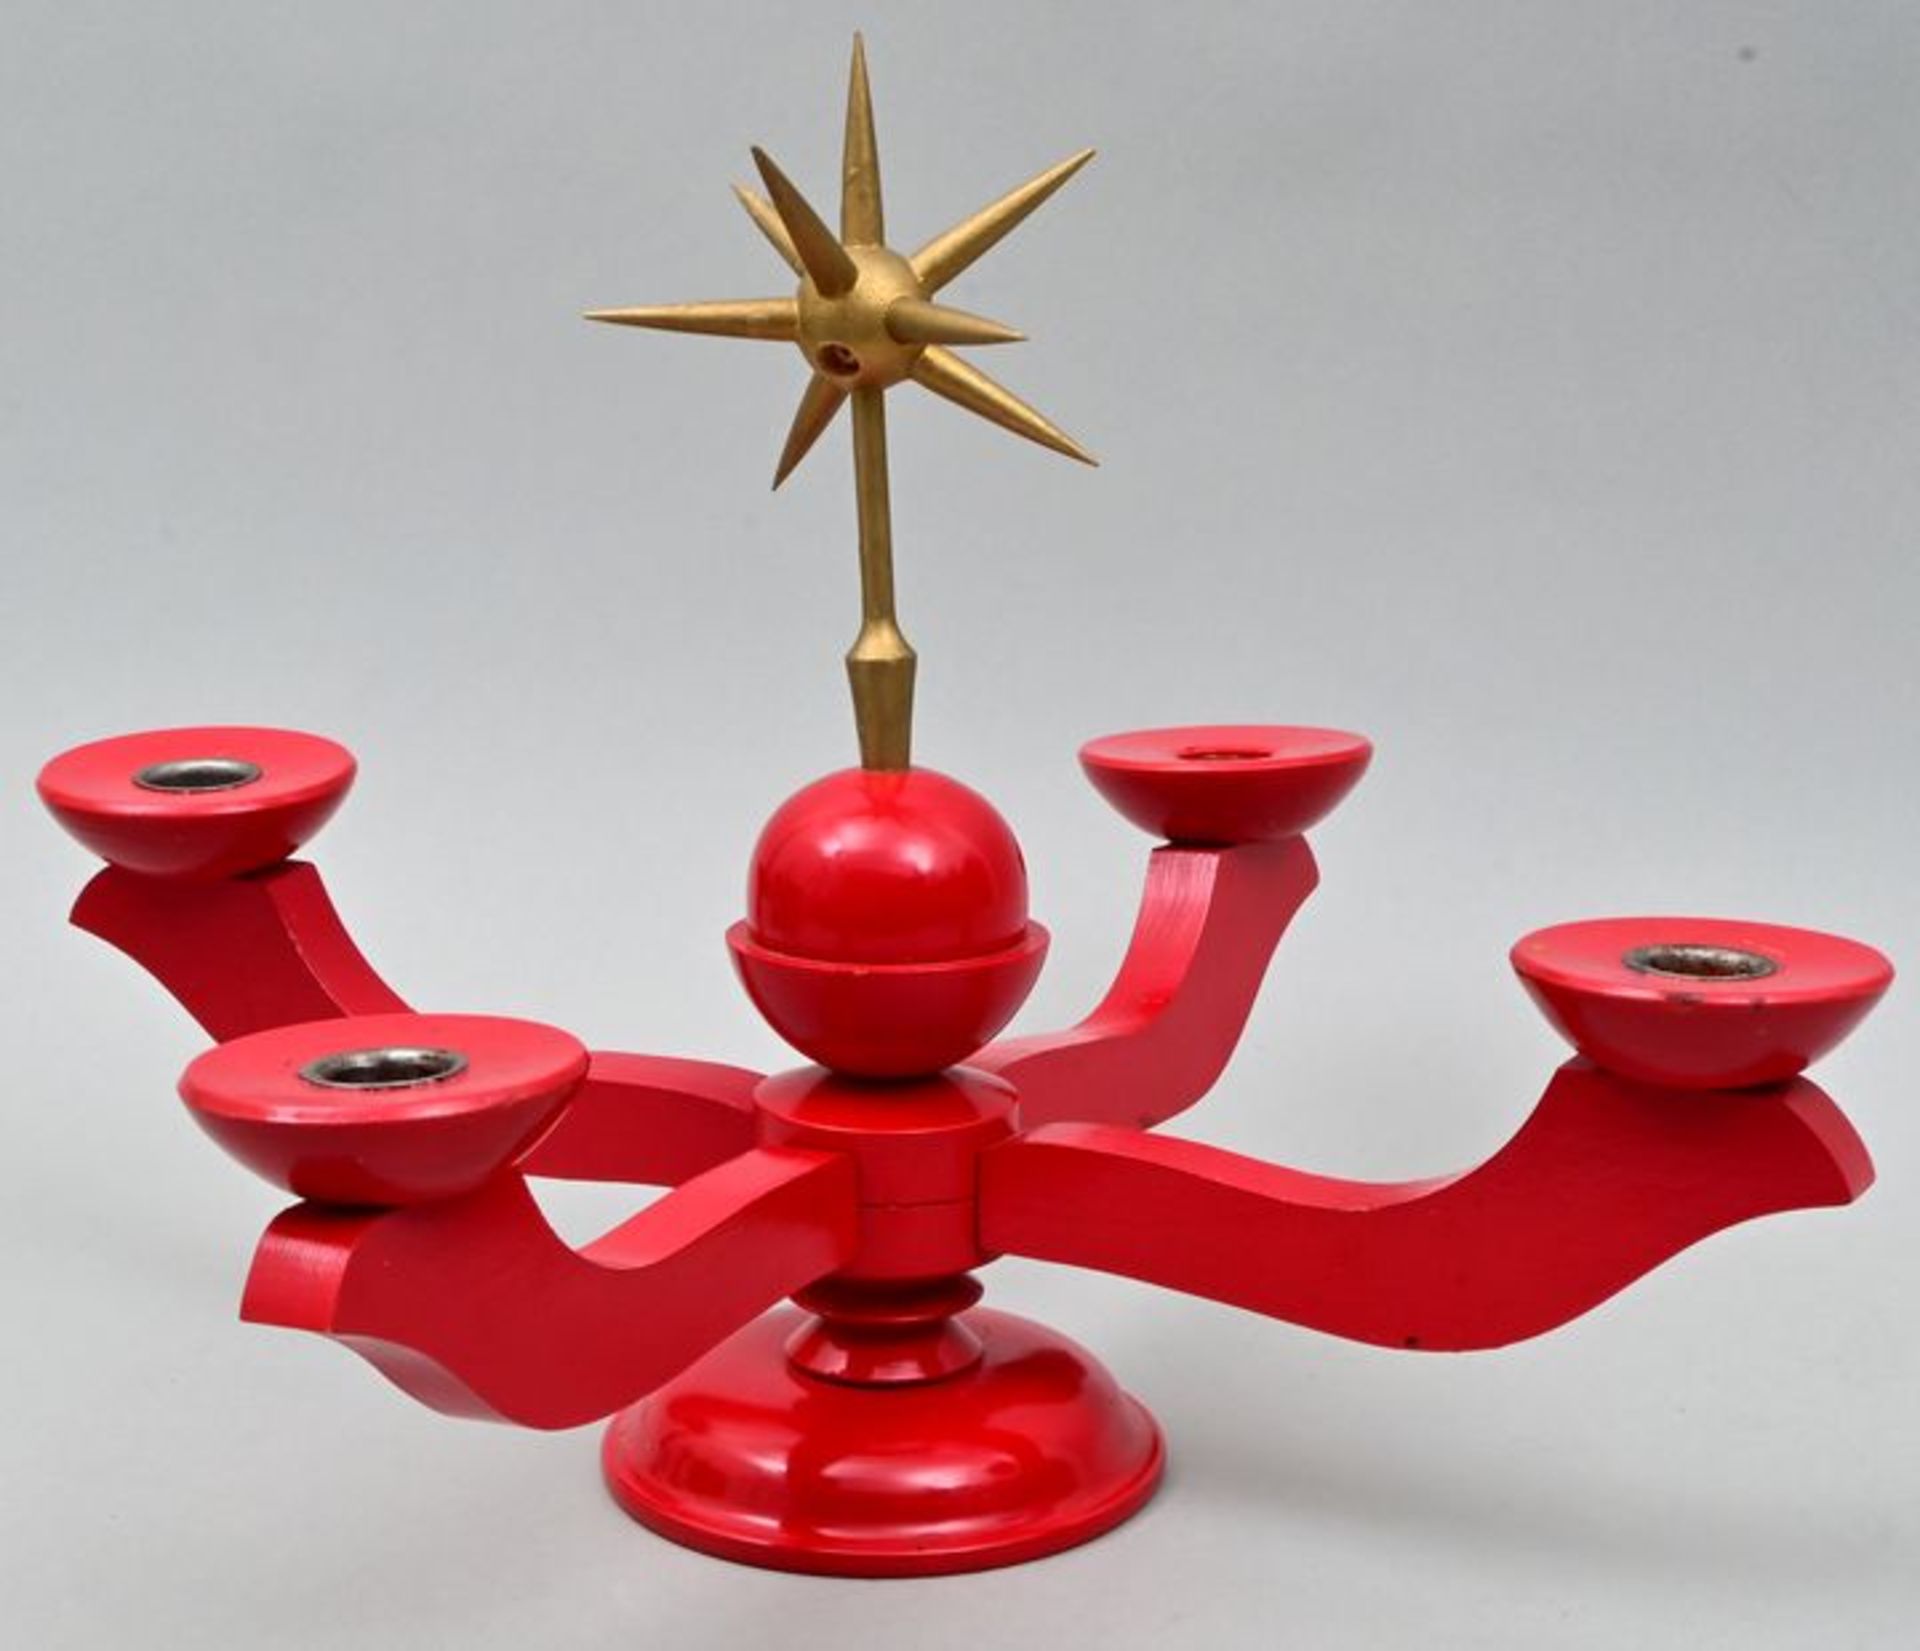 Adventsleuchter / Advent candlestick